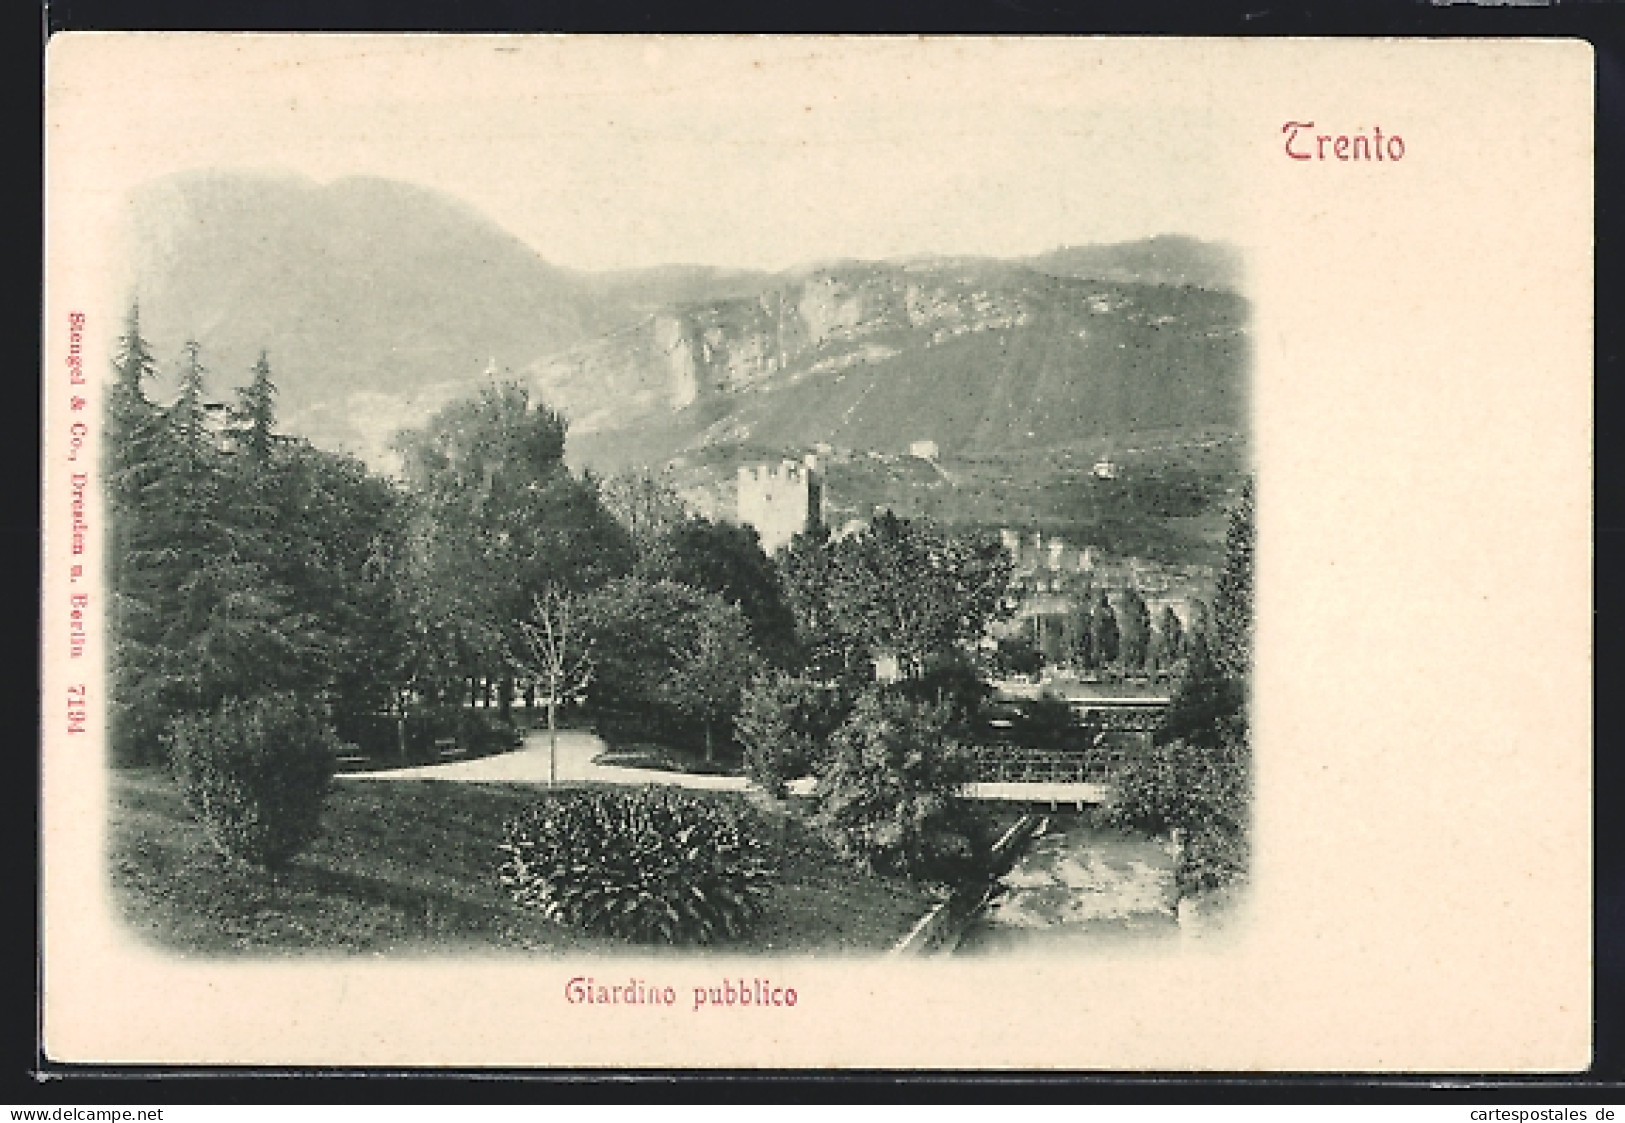 Cartolina Trento, Giardino Pubblico  - Trento